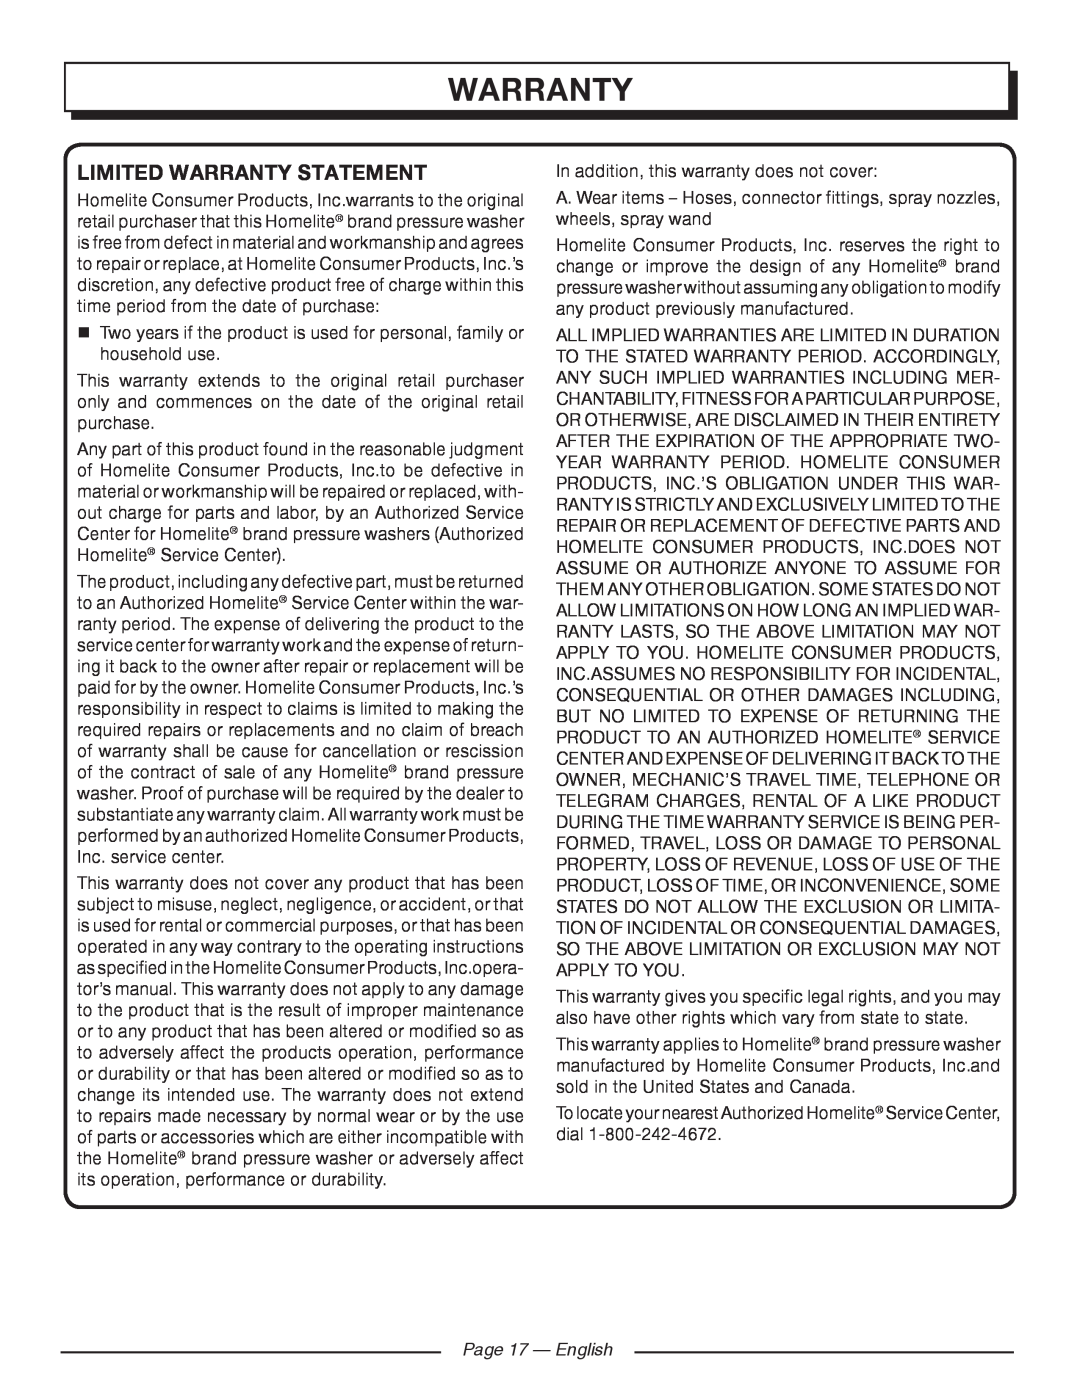 Homelite UT80720 manuel dutilisation Limited Warranty Statement, Page 17 - English 